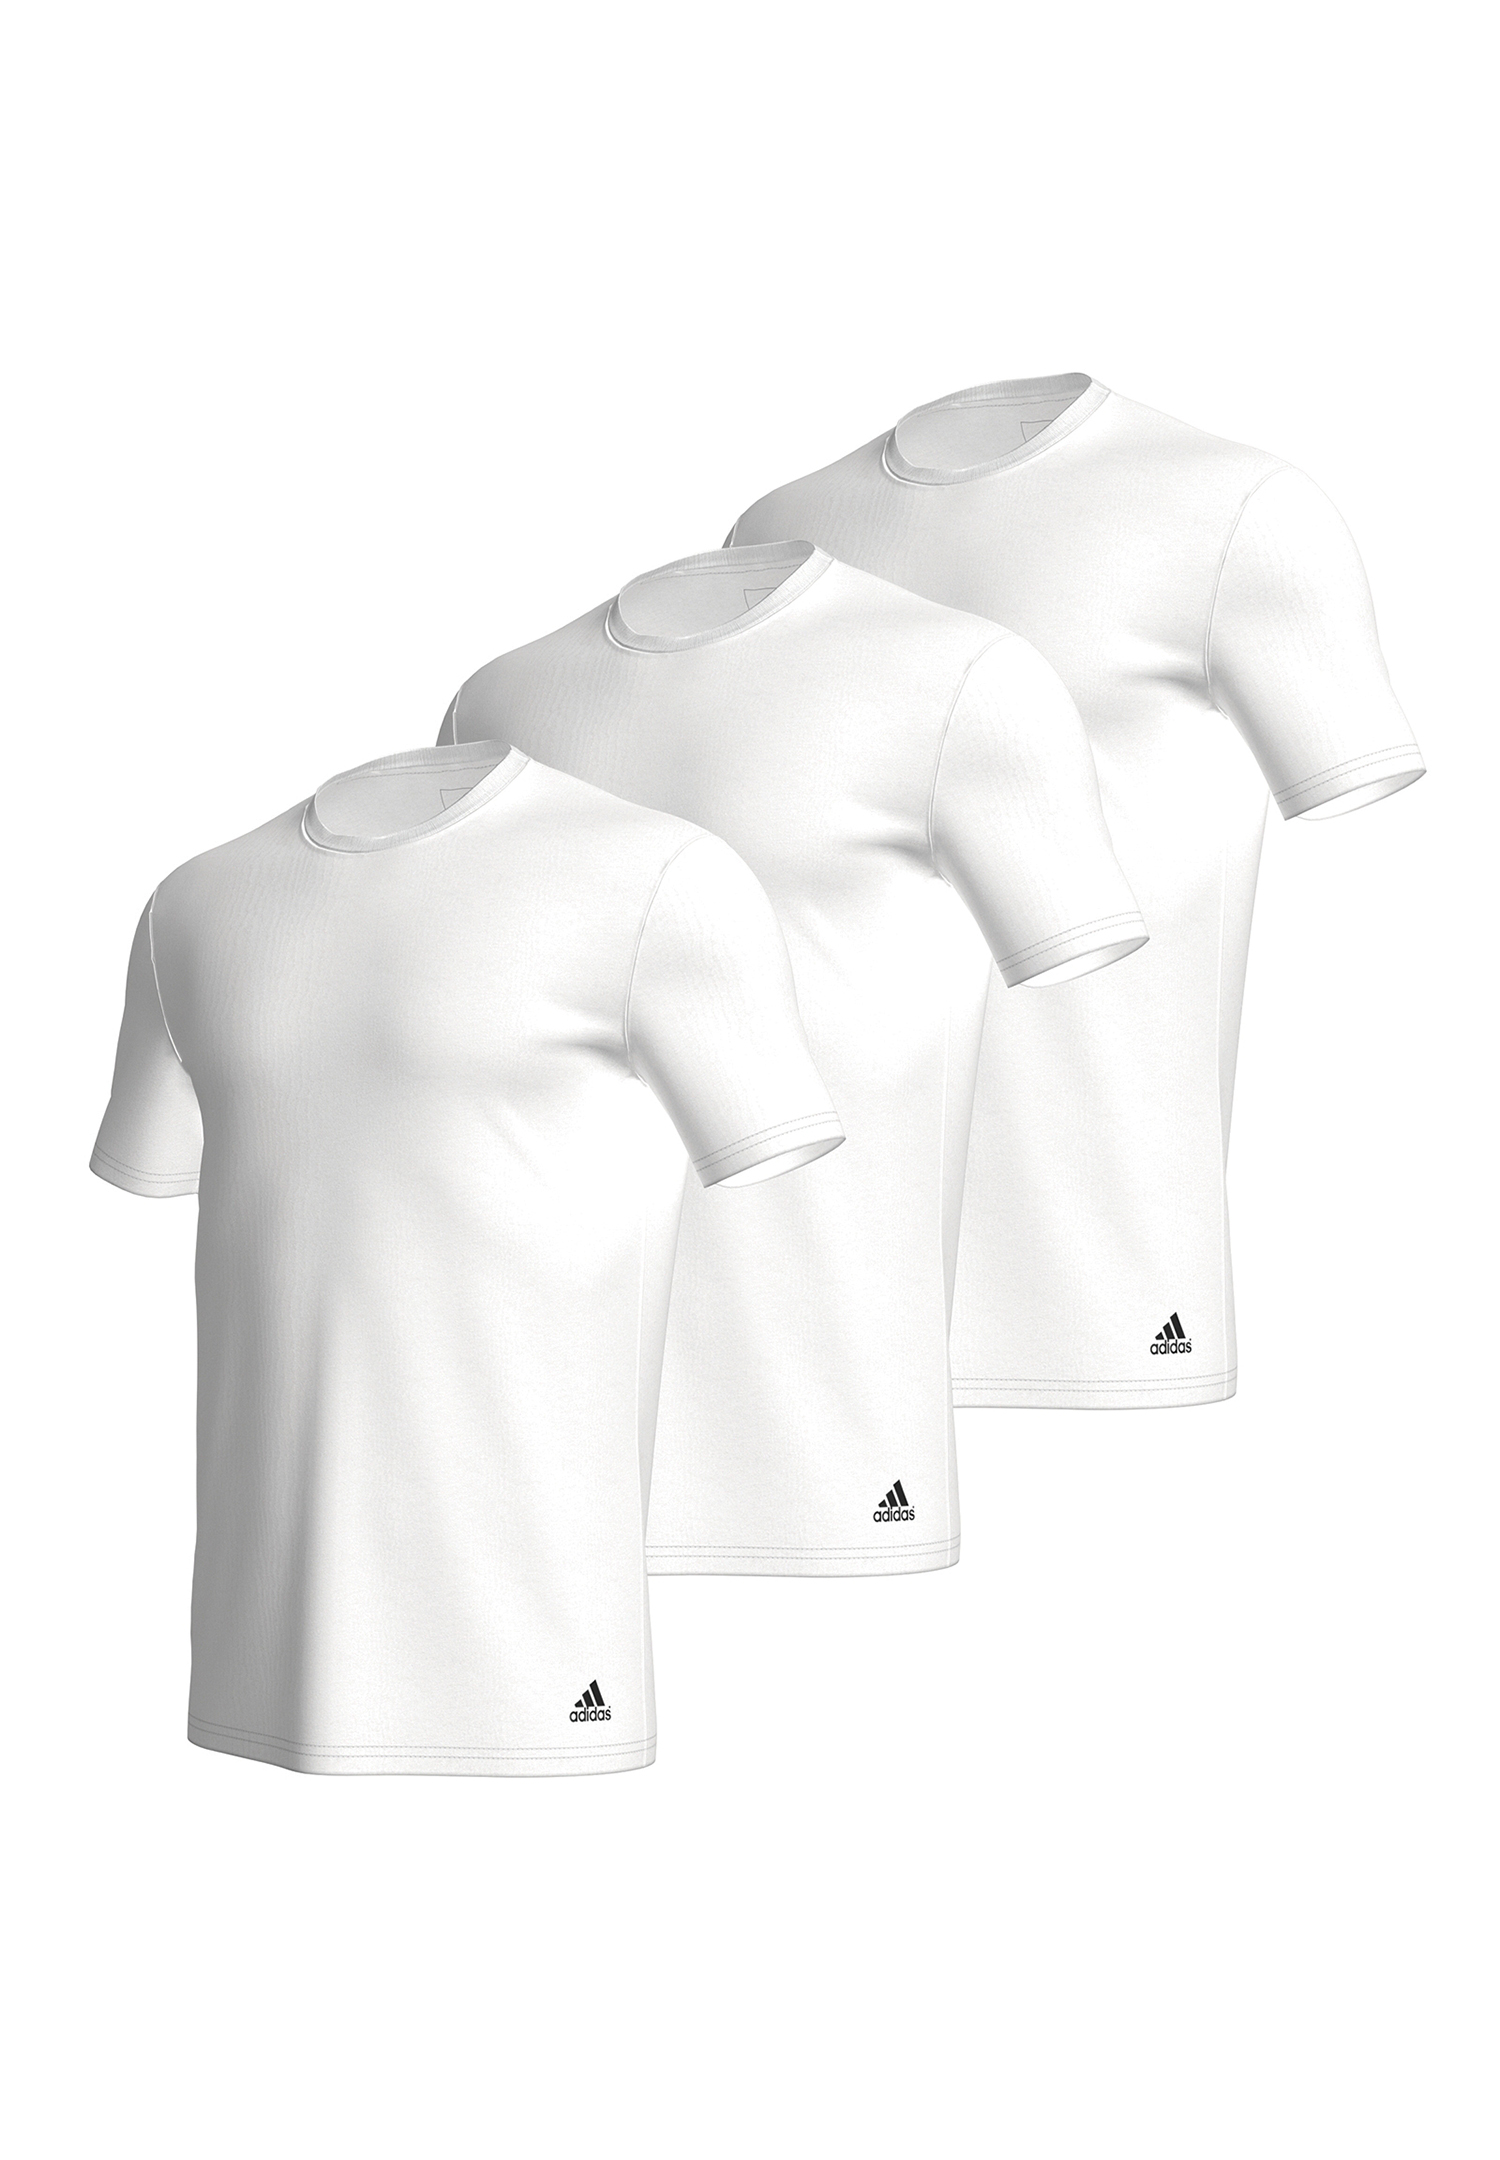 3 er Pack adidas Crew Neck T-Shirt Herren Unterhemd Rund Ausschnitt Baumwolle langlebig